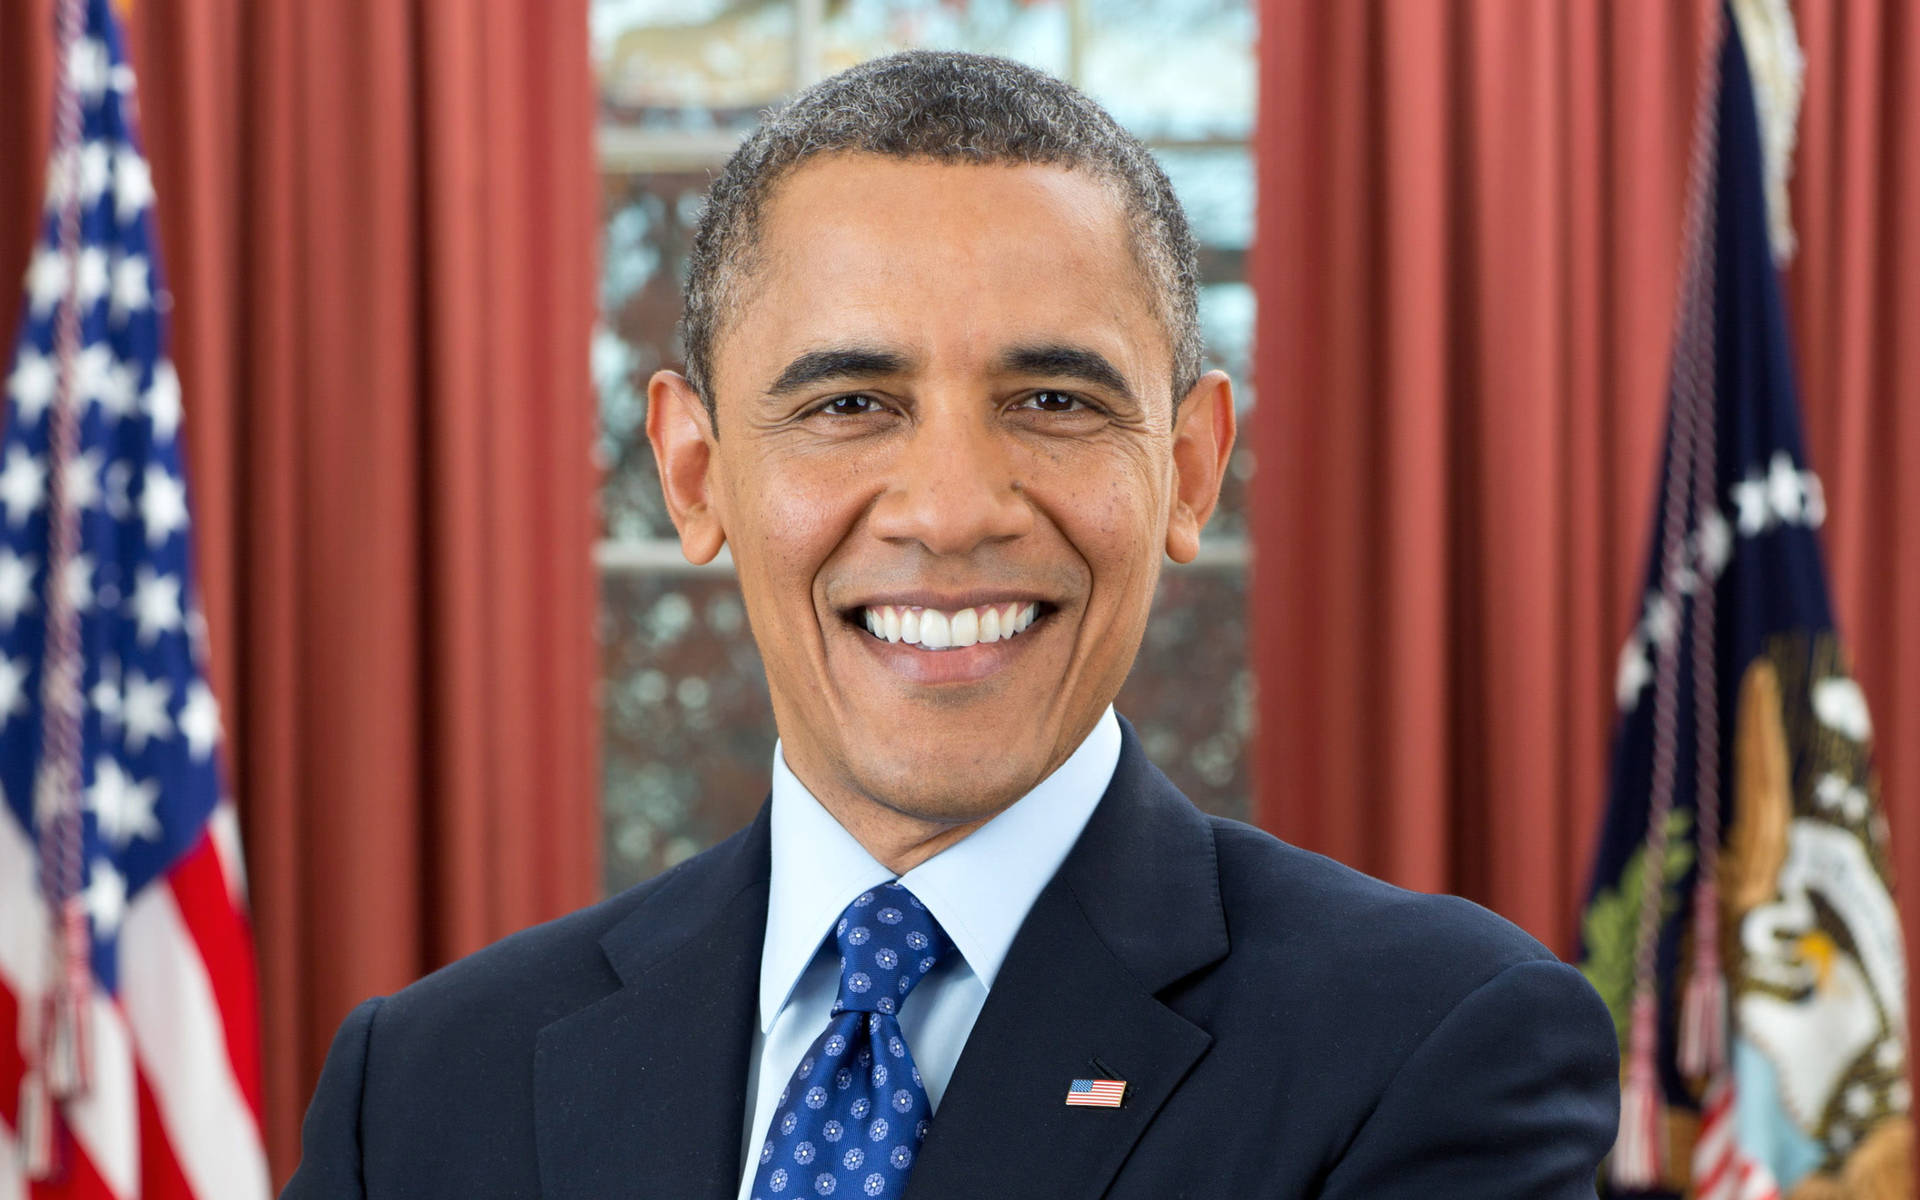 Barack Obama The 44th President